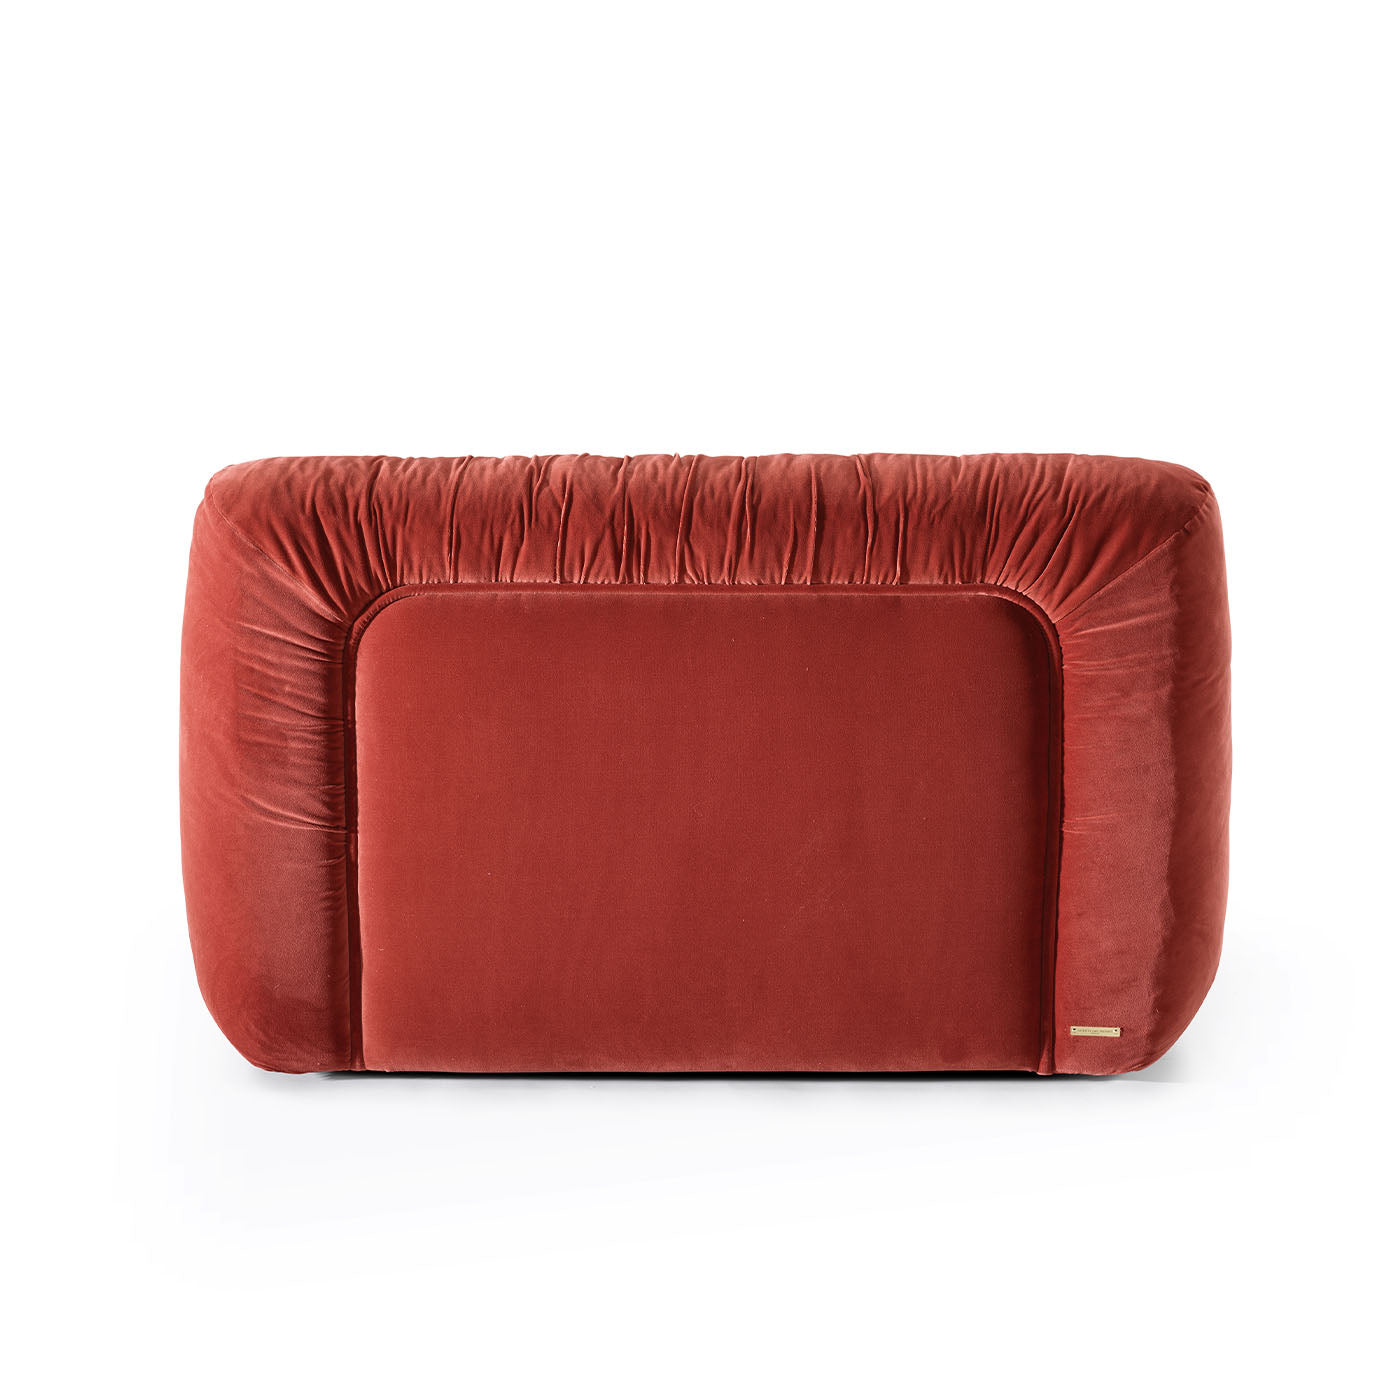 Mambo Orange Fabric Armchair by Lorenza Bozzoli - Alternative view 2